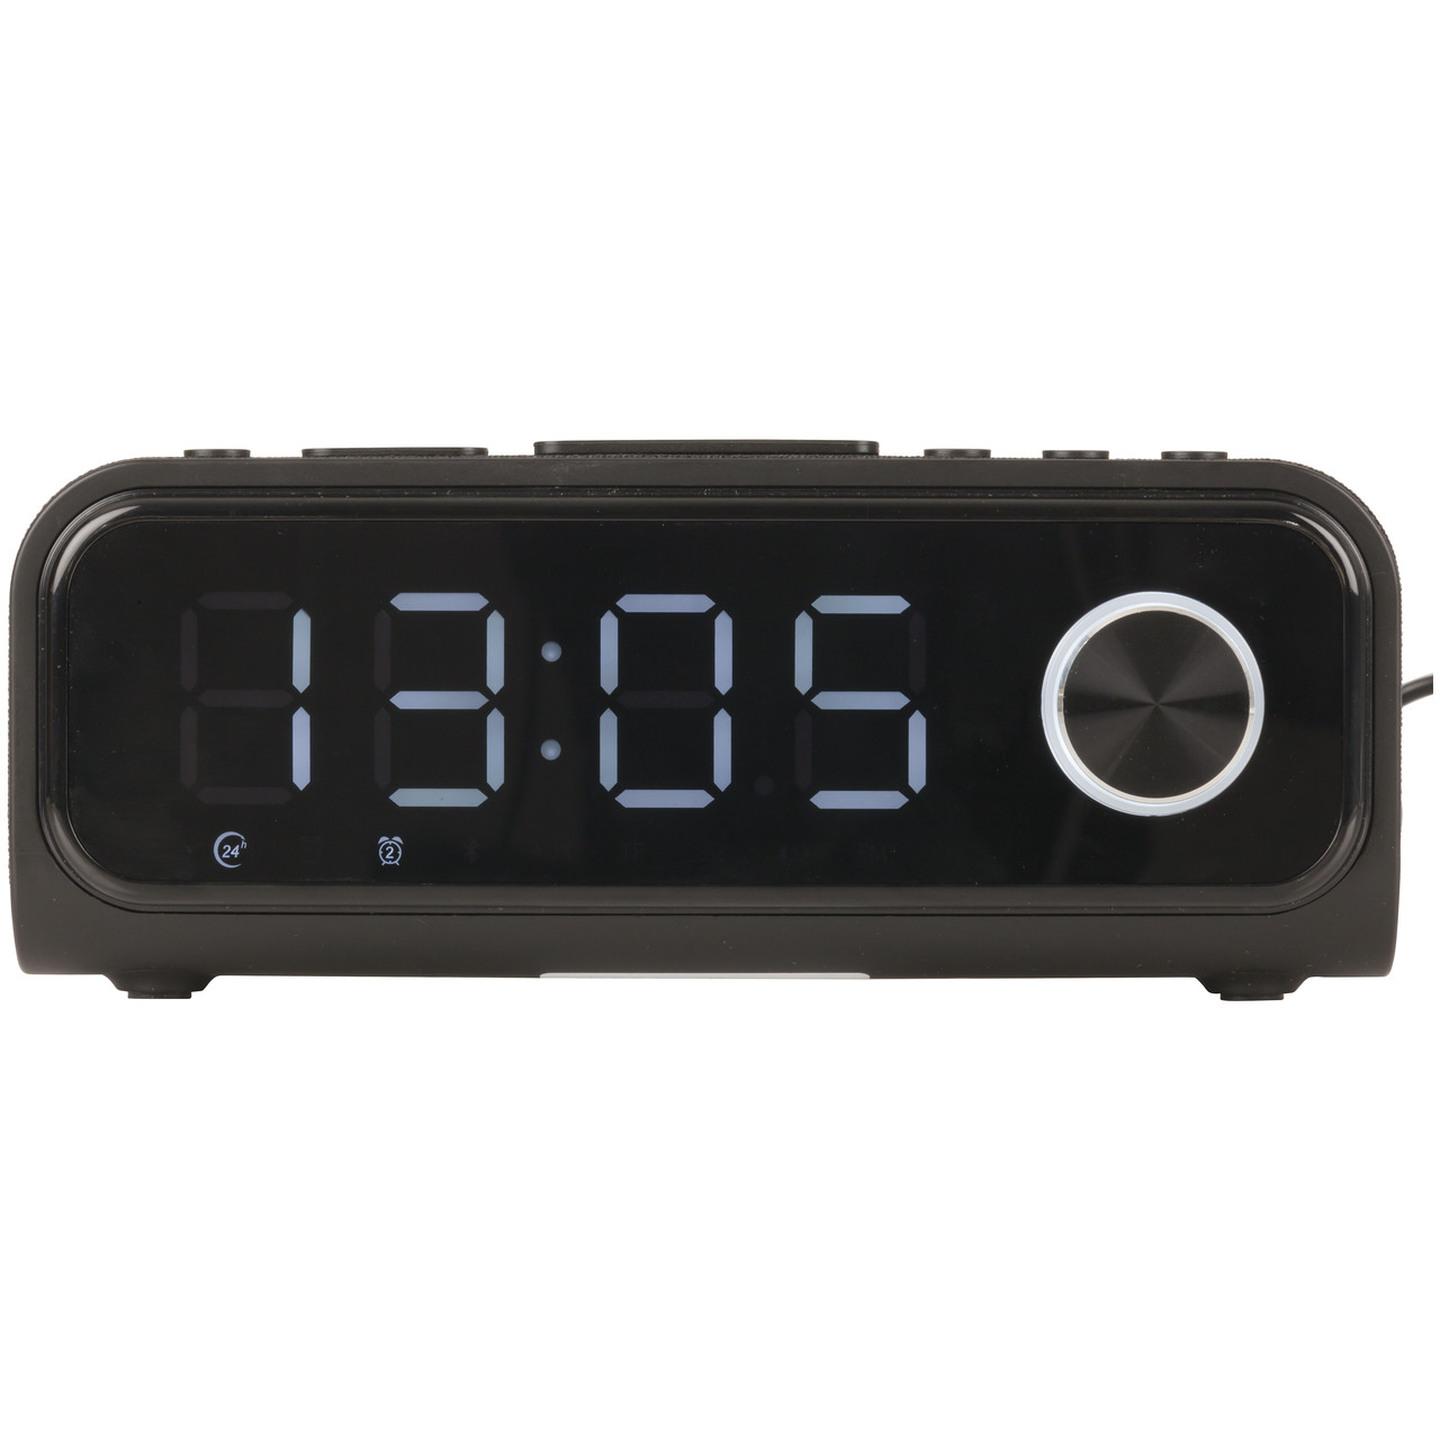 Alarm LED Clock Radio with QI Wireless Charging